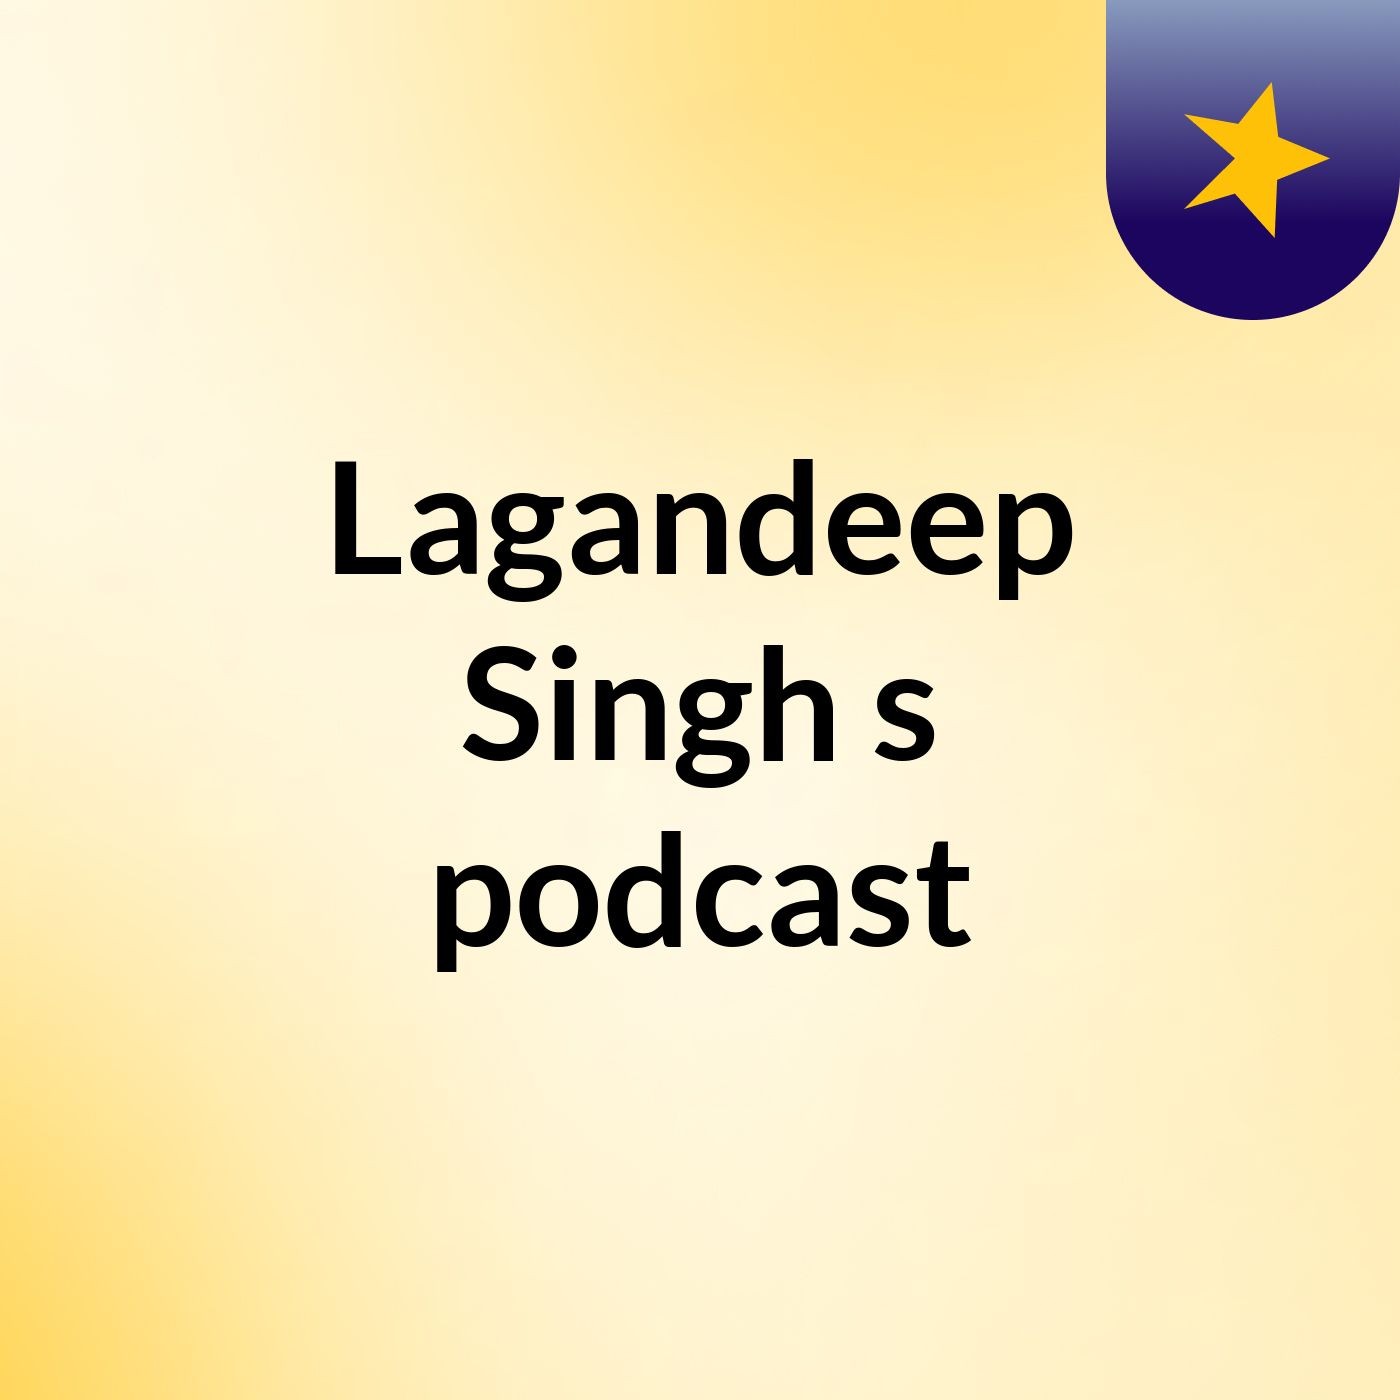 Lagandeep Singh